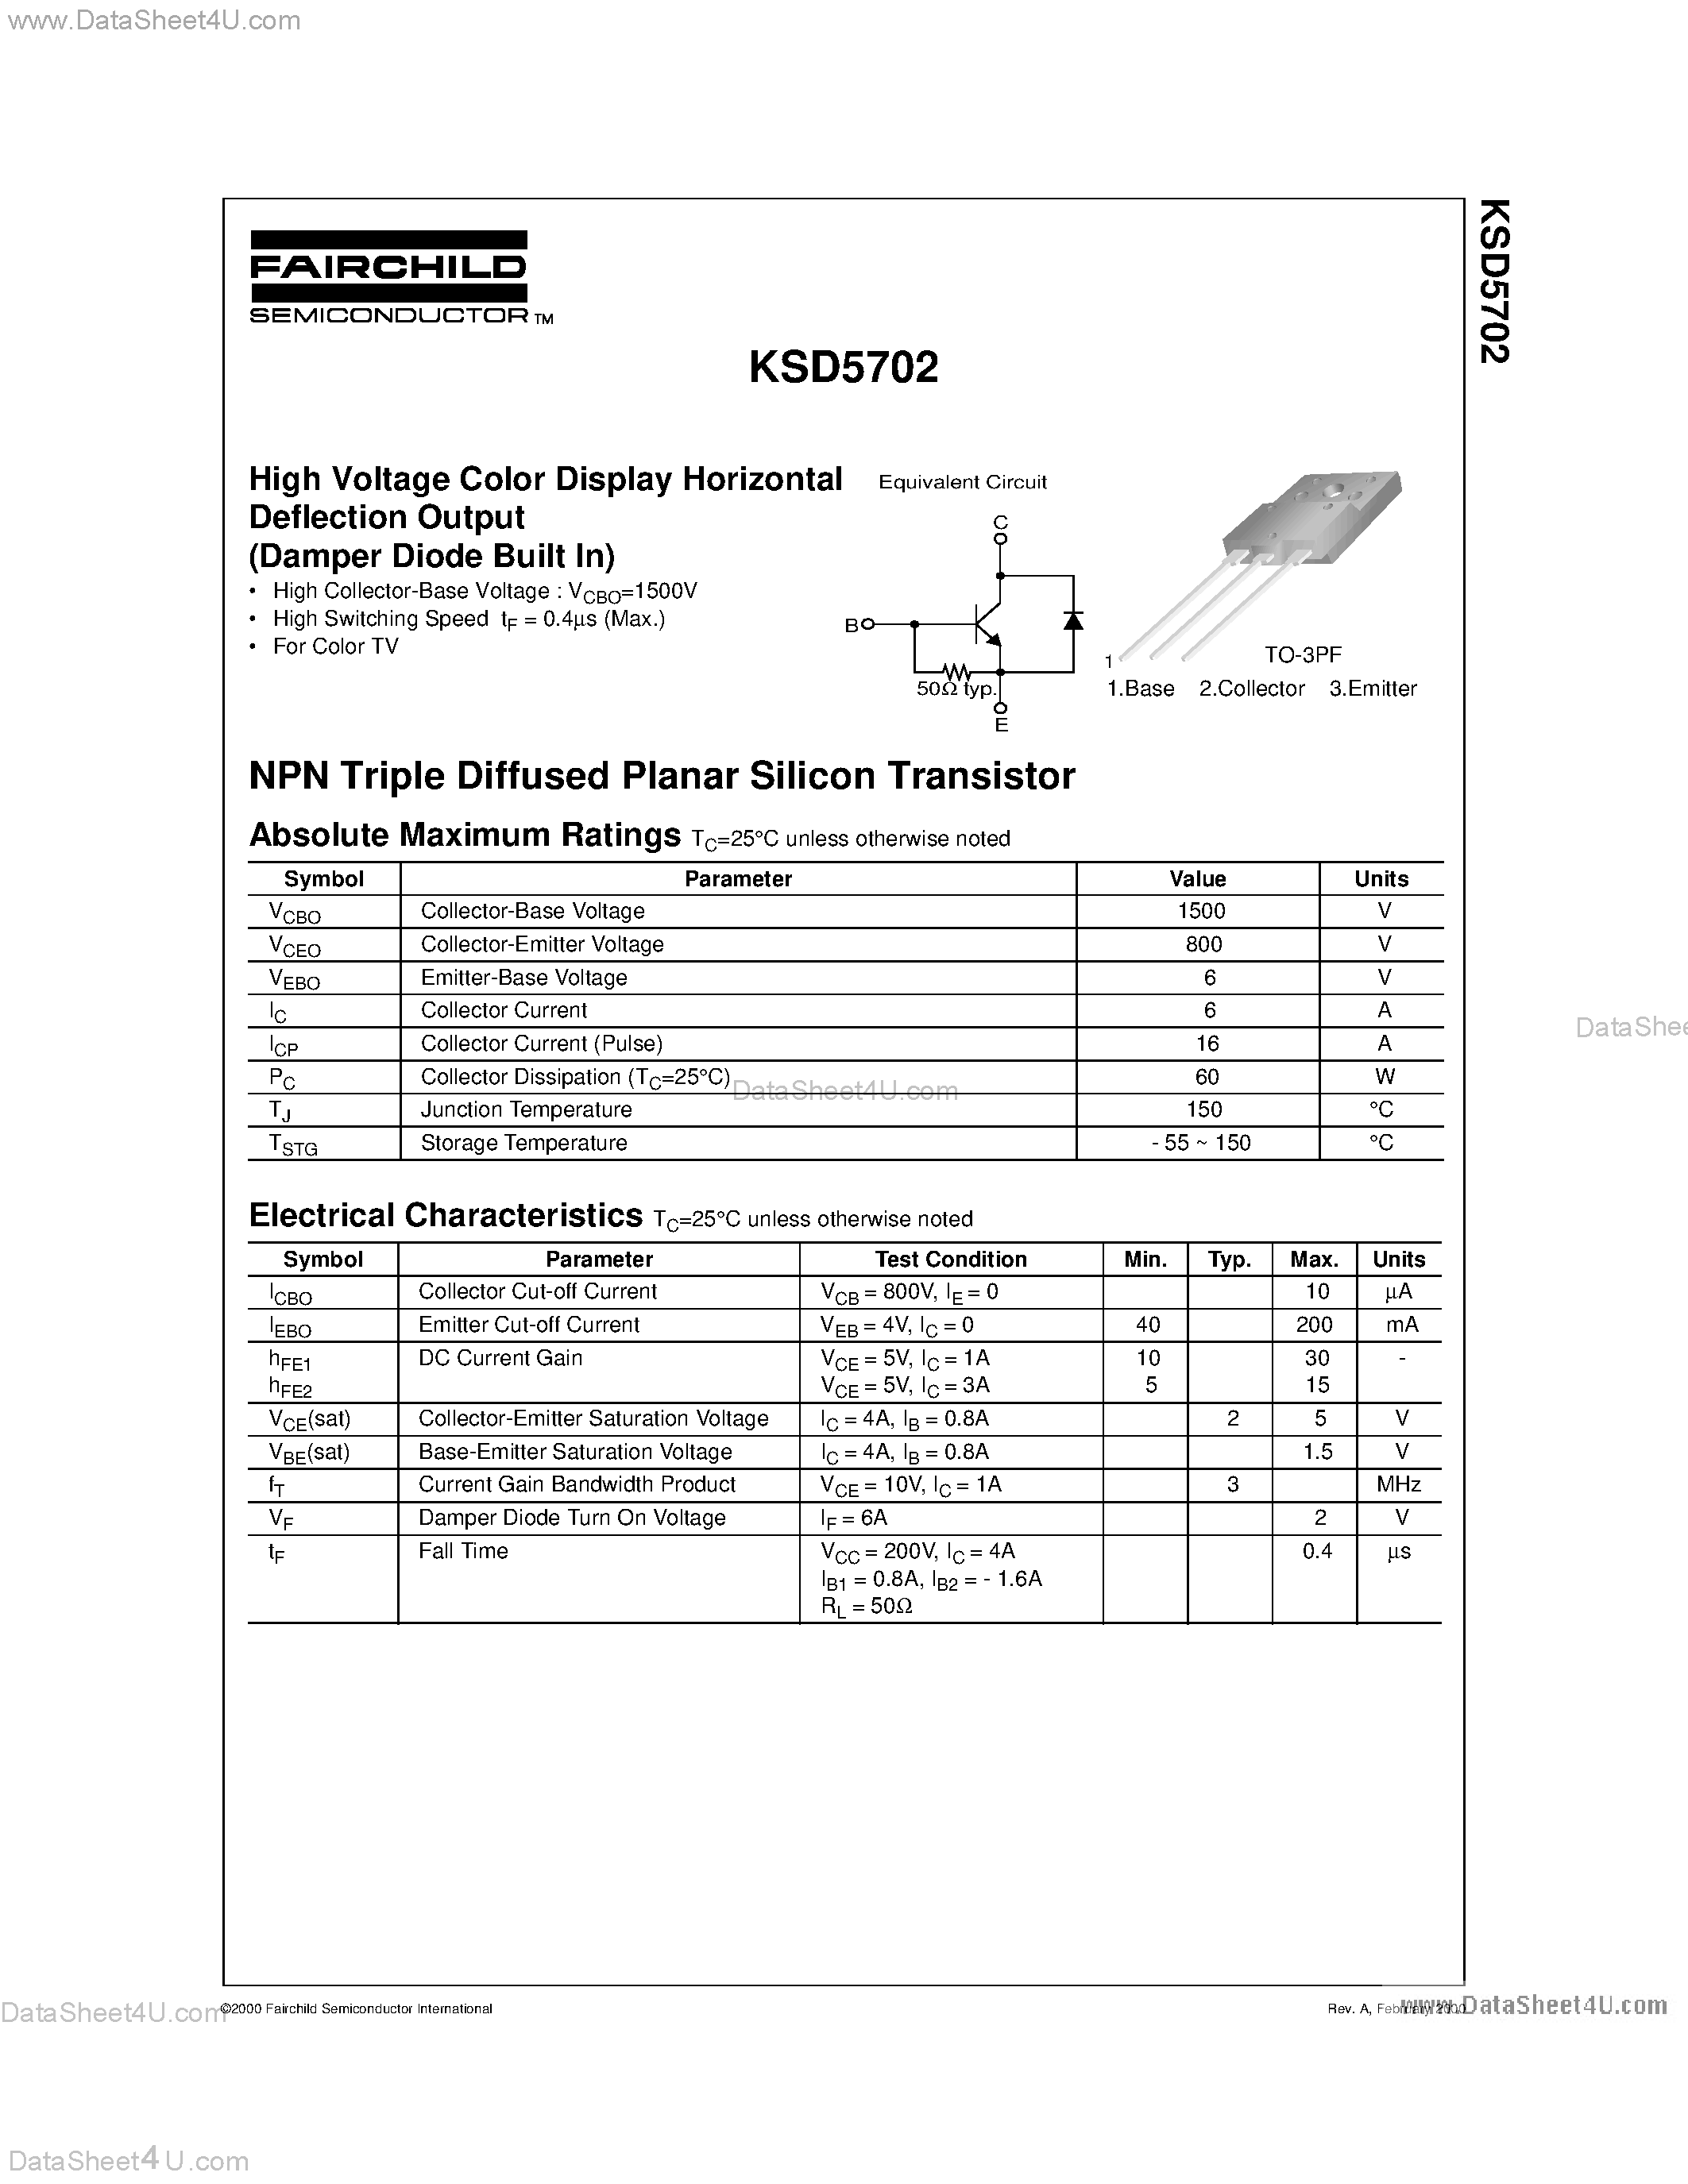 Даташит KSD5702 - High Voltage Color Display Horizontal Deflection Output страница 1